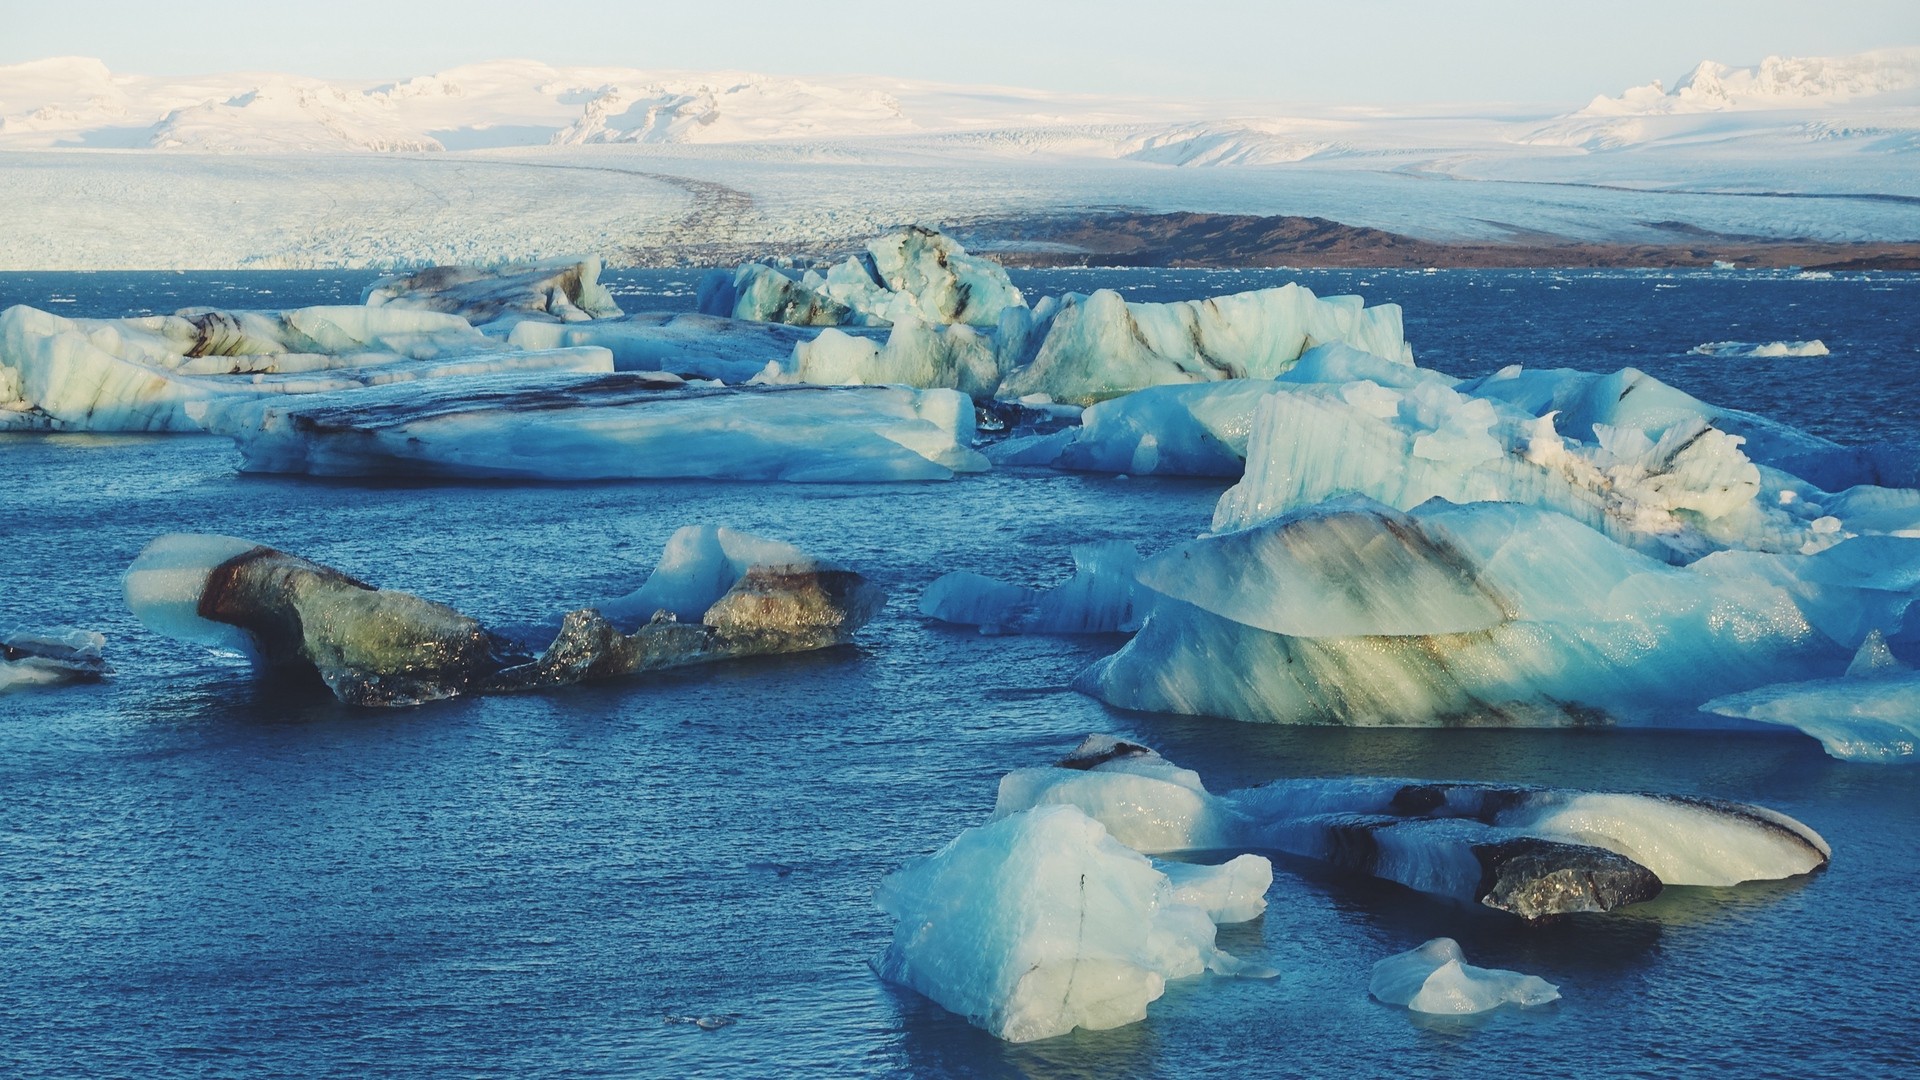 1920x1080 wallpapers: iceberg, banchi di ghiaccio, oceano (image)